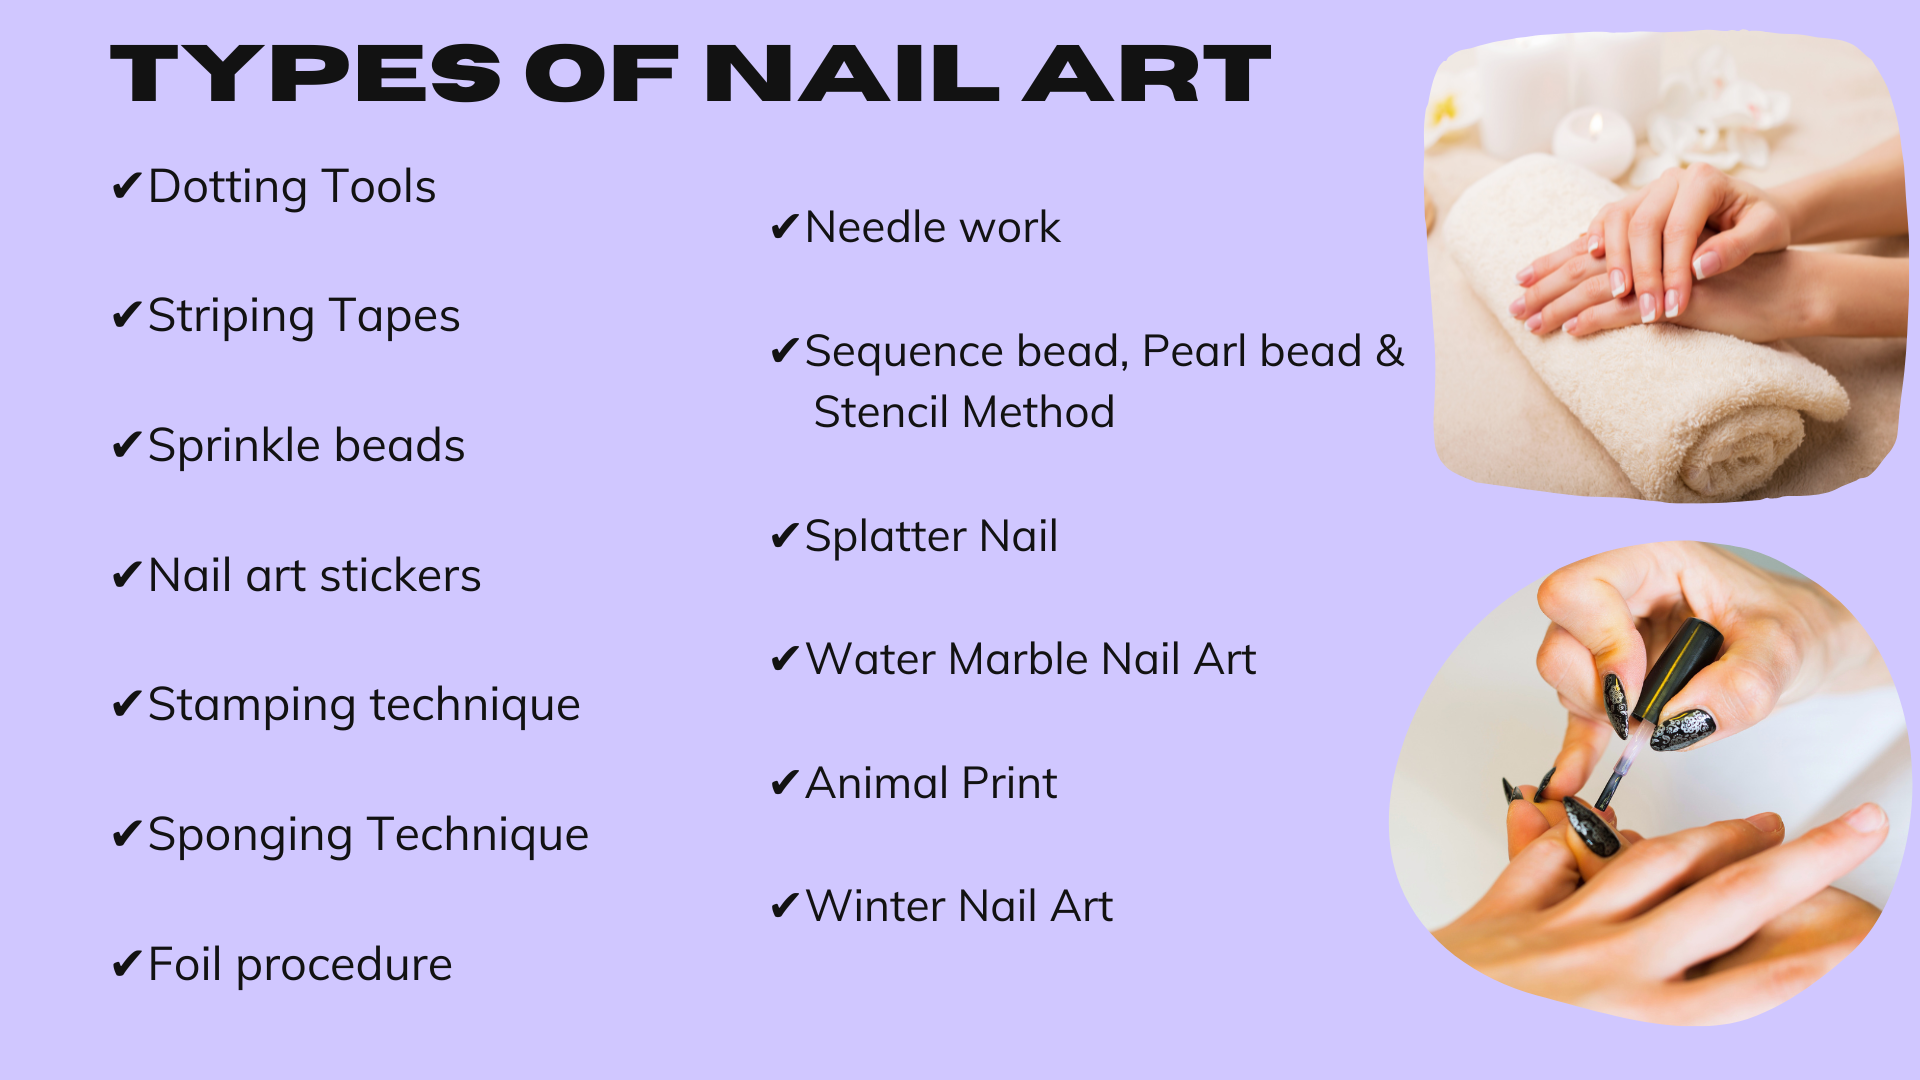 Nailart using needle 💅 #nailart #nailpolish #nails #hisar #nails_creation9  #instagram #instagood #instagramreels | Instagram